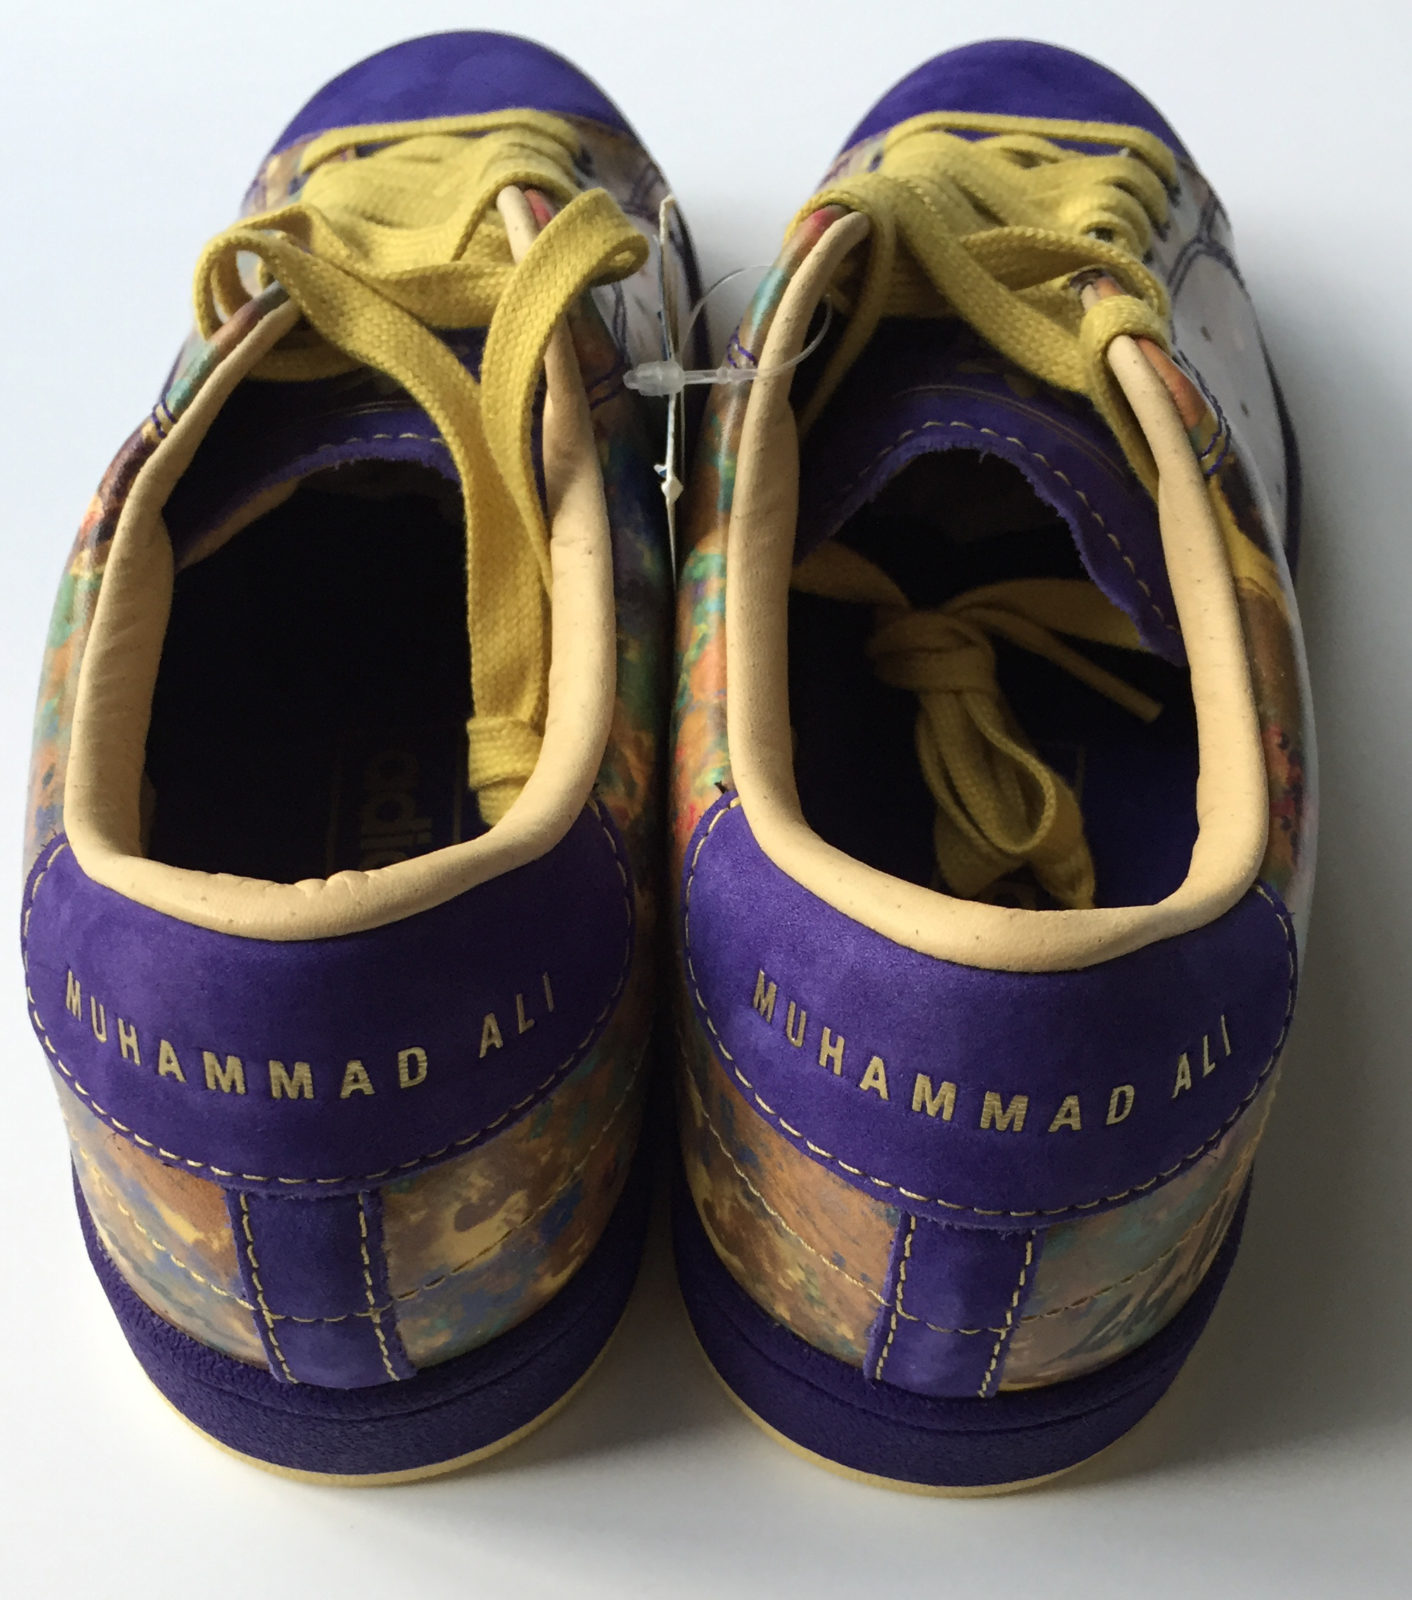 Muhammad Ali Adidas Sneakers